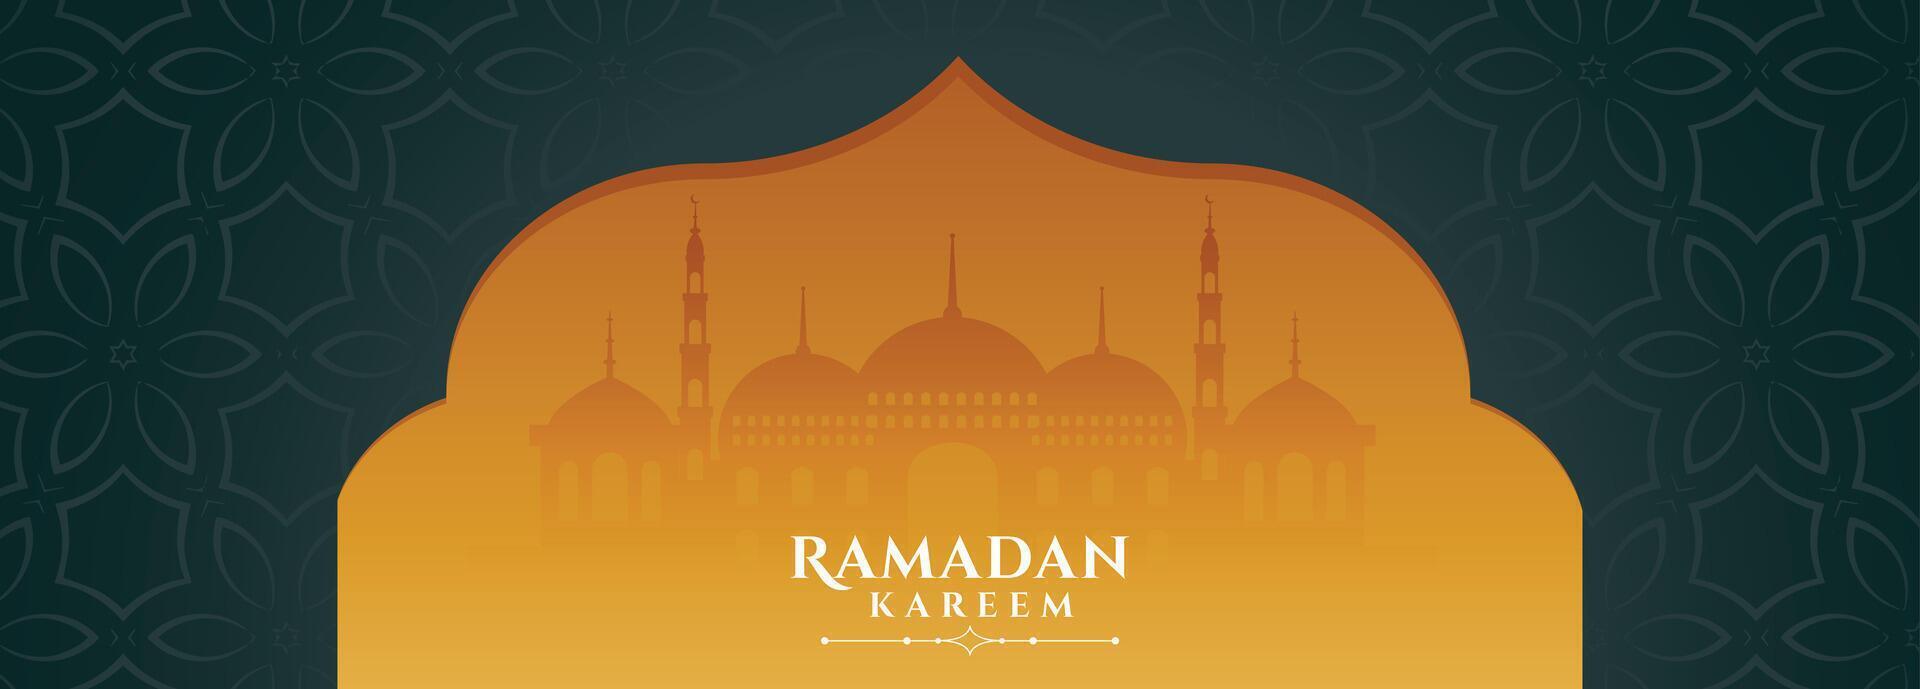 Ramadan kareem Banner im islamisch Stil vektor